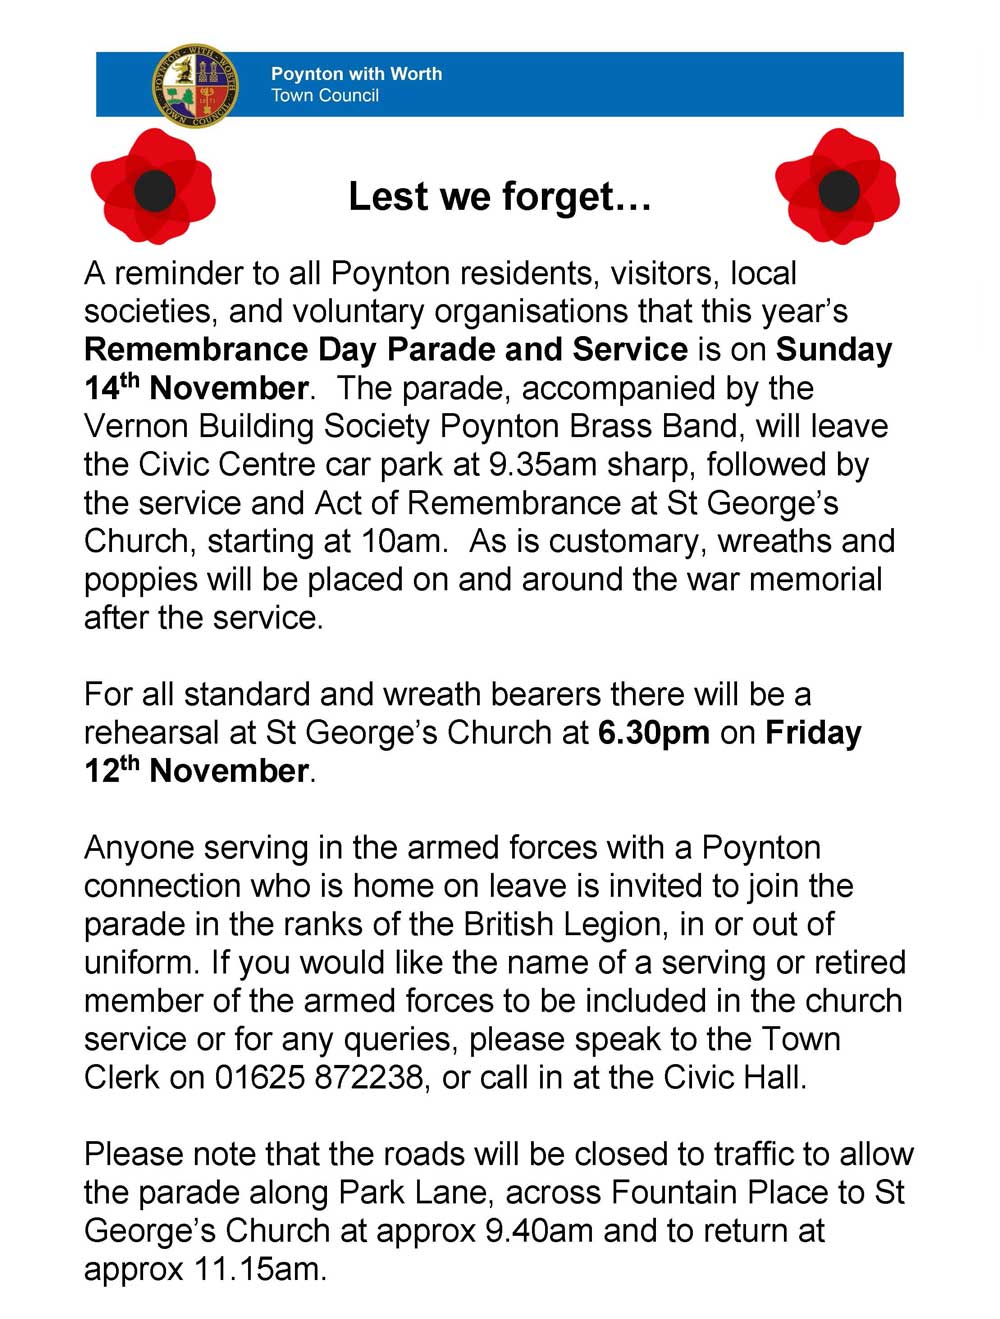 Remembrance Sunday 14th November, Public Notice